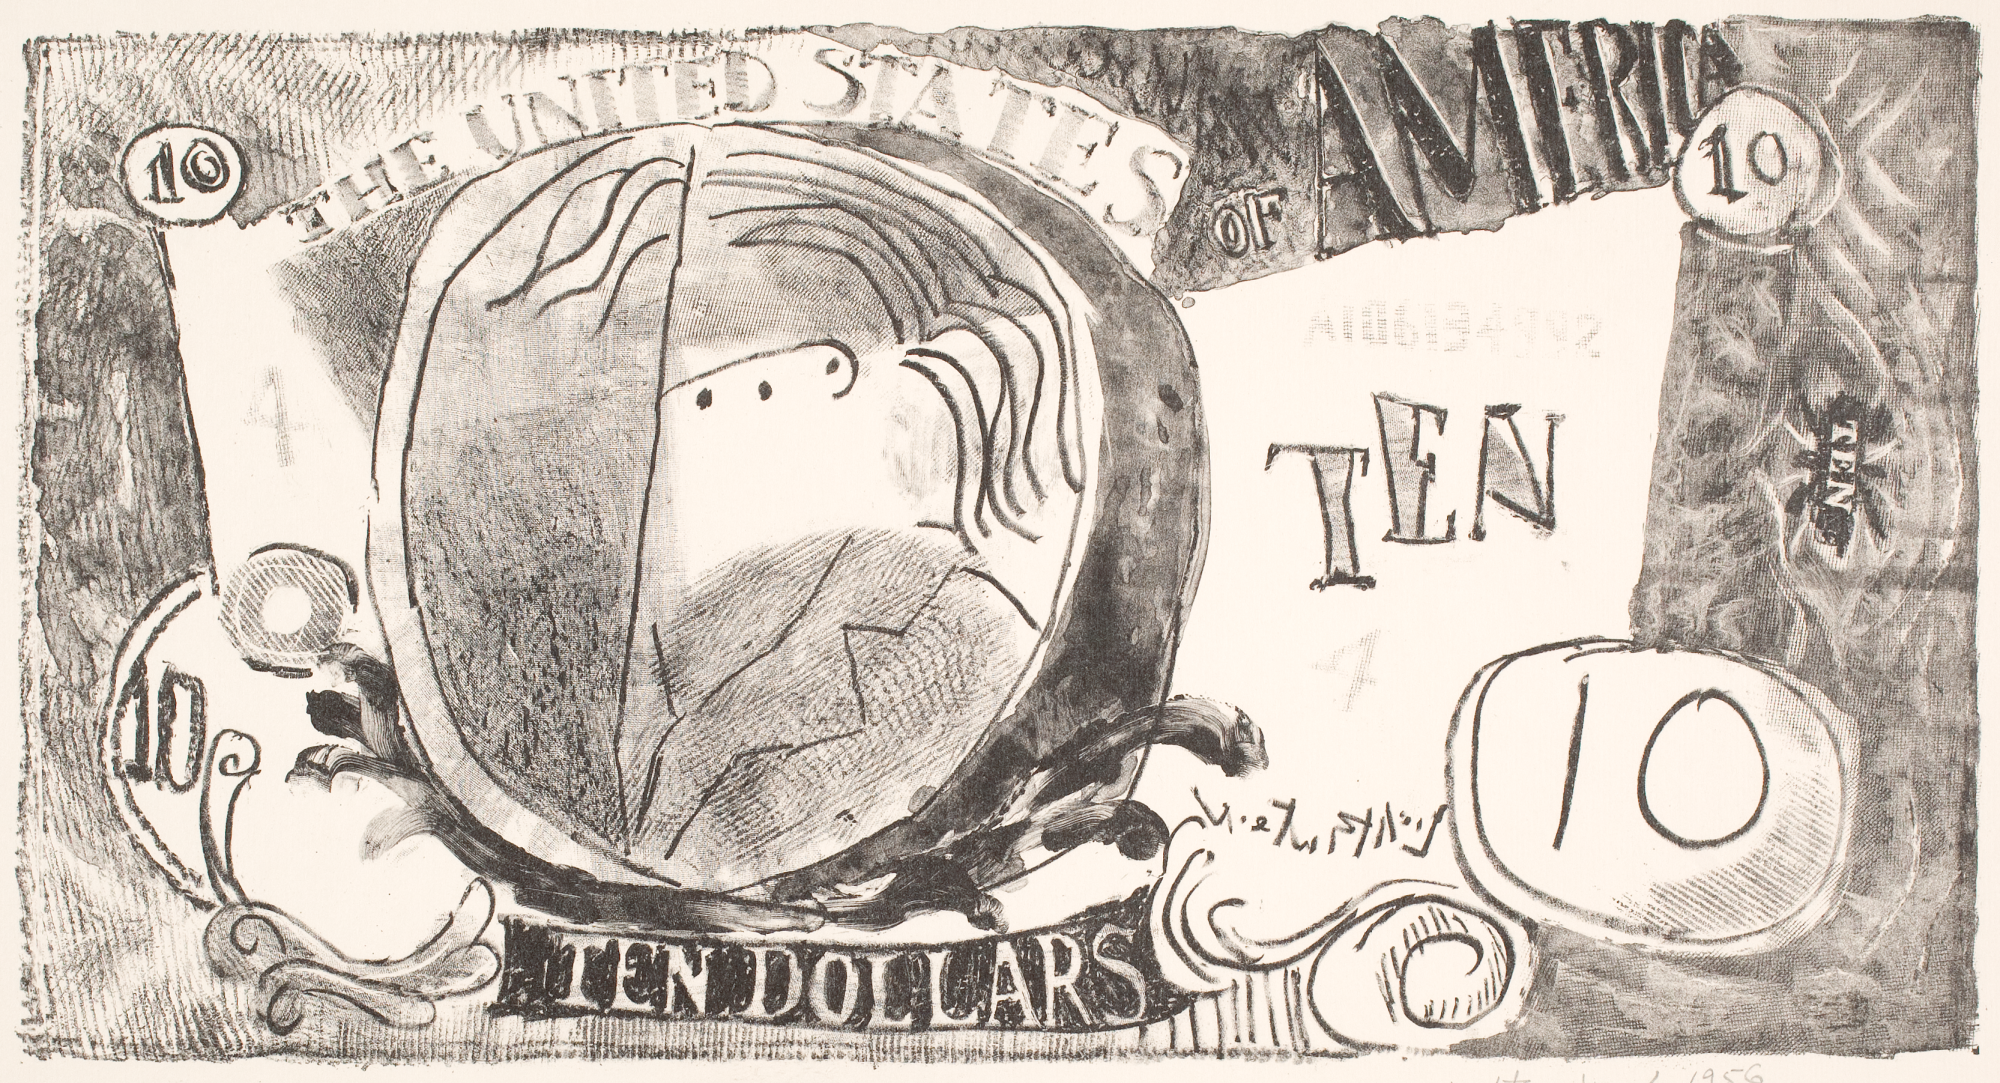 Roy Lichtenstein, Ten Dollar Bill (Ten Dollars), 1956. Lithograph on wove paper, edition 4/25; 16 7/8 x 22 5/8 inches (42.9 x 57.5 cm). Collection of the Whitney Museum of American Art, New York. The Roy Lichtenstein Study Collection; gift of the Roy Lichtenstein Foundation, 2019.92. © Estate of Roy Lichtenstein.